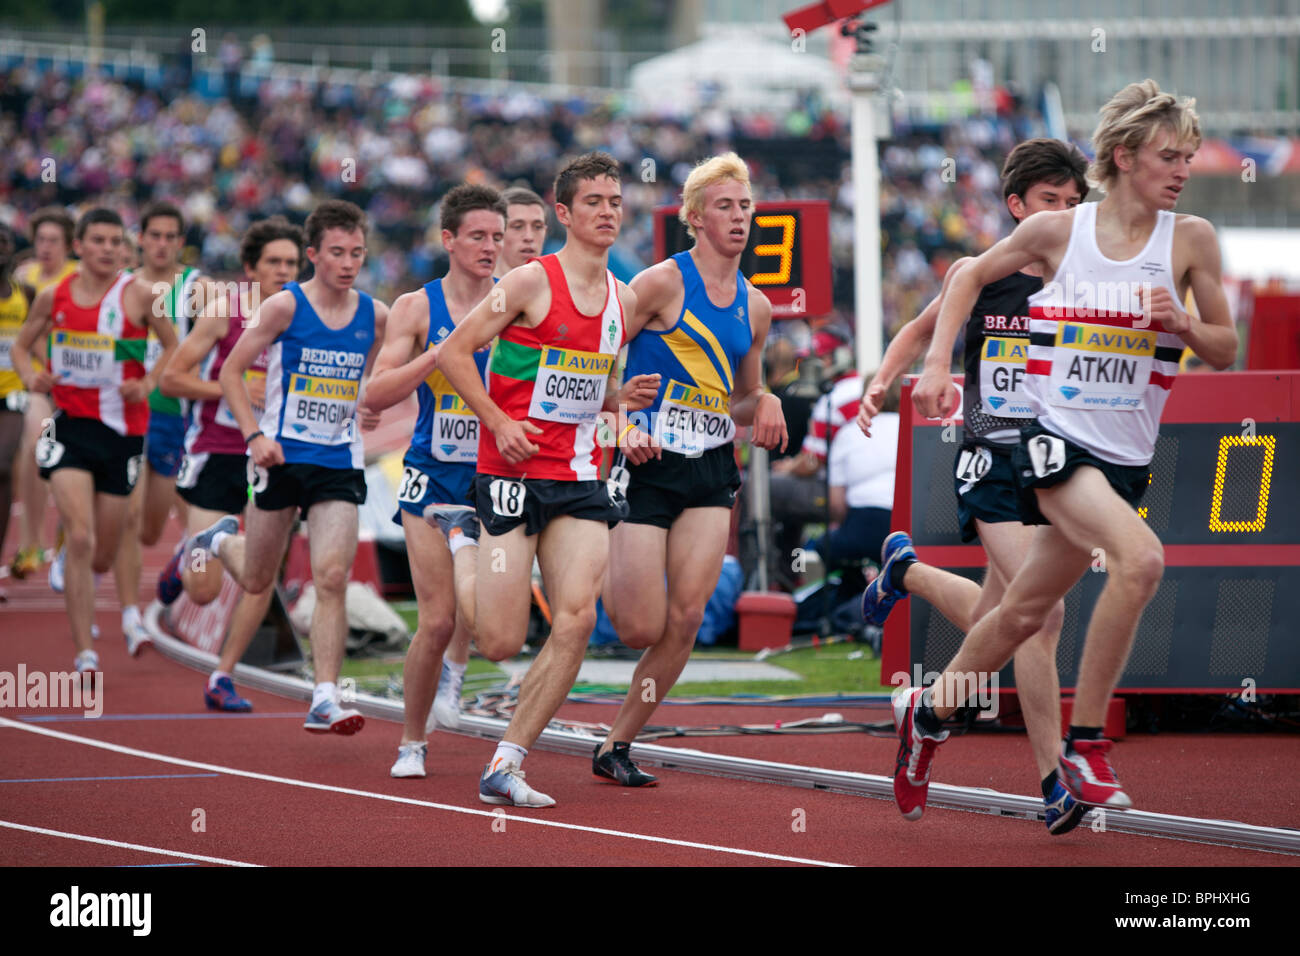 3000m U20 race at Aviva London Grand Prix, Crystal Palace, London. August 2010. Stock Photo